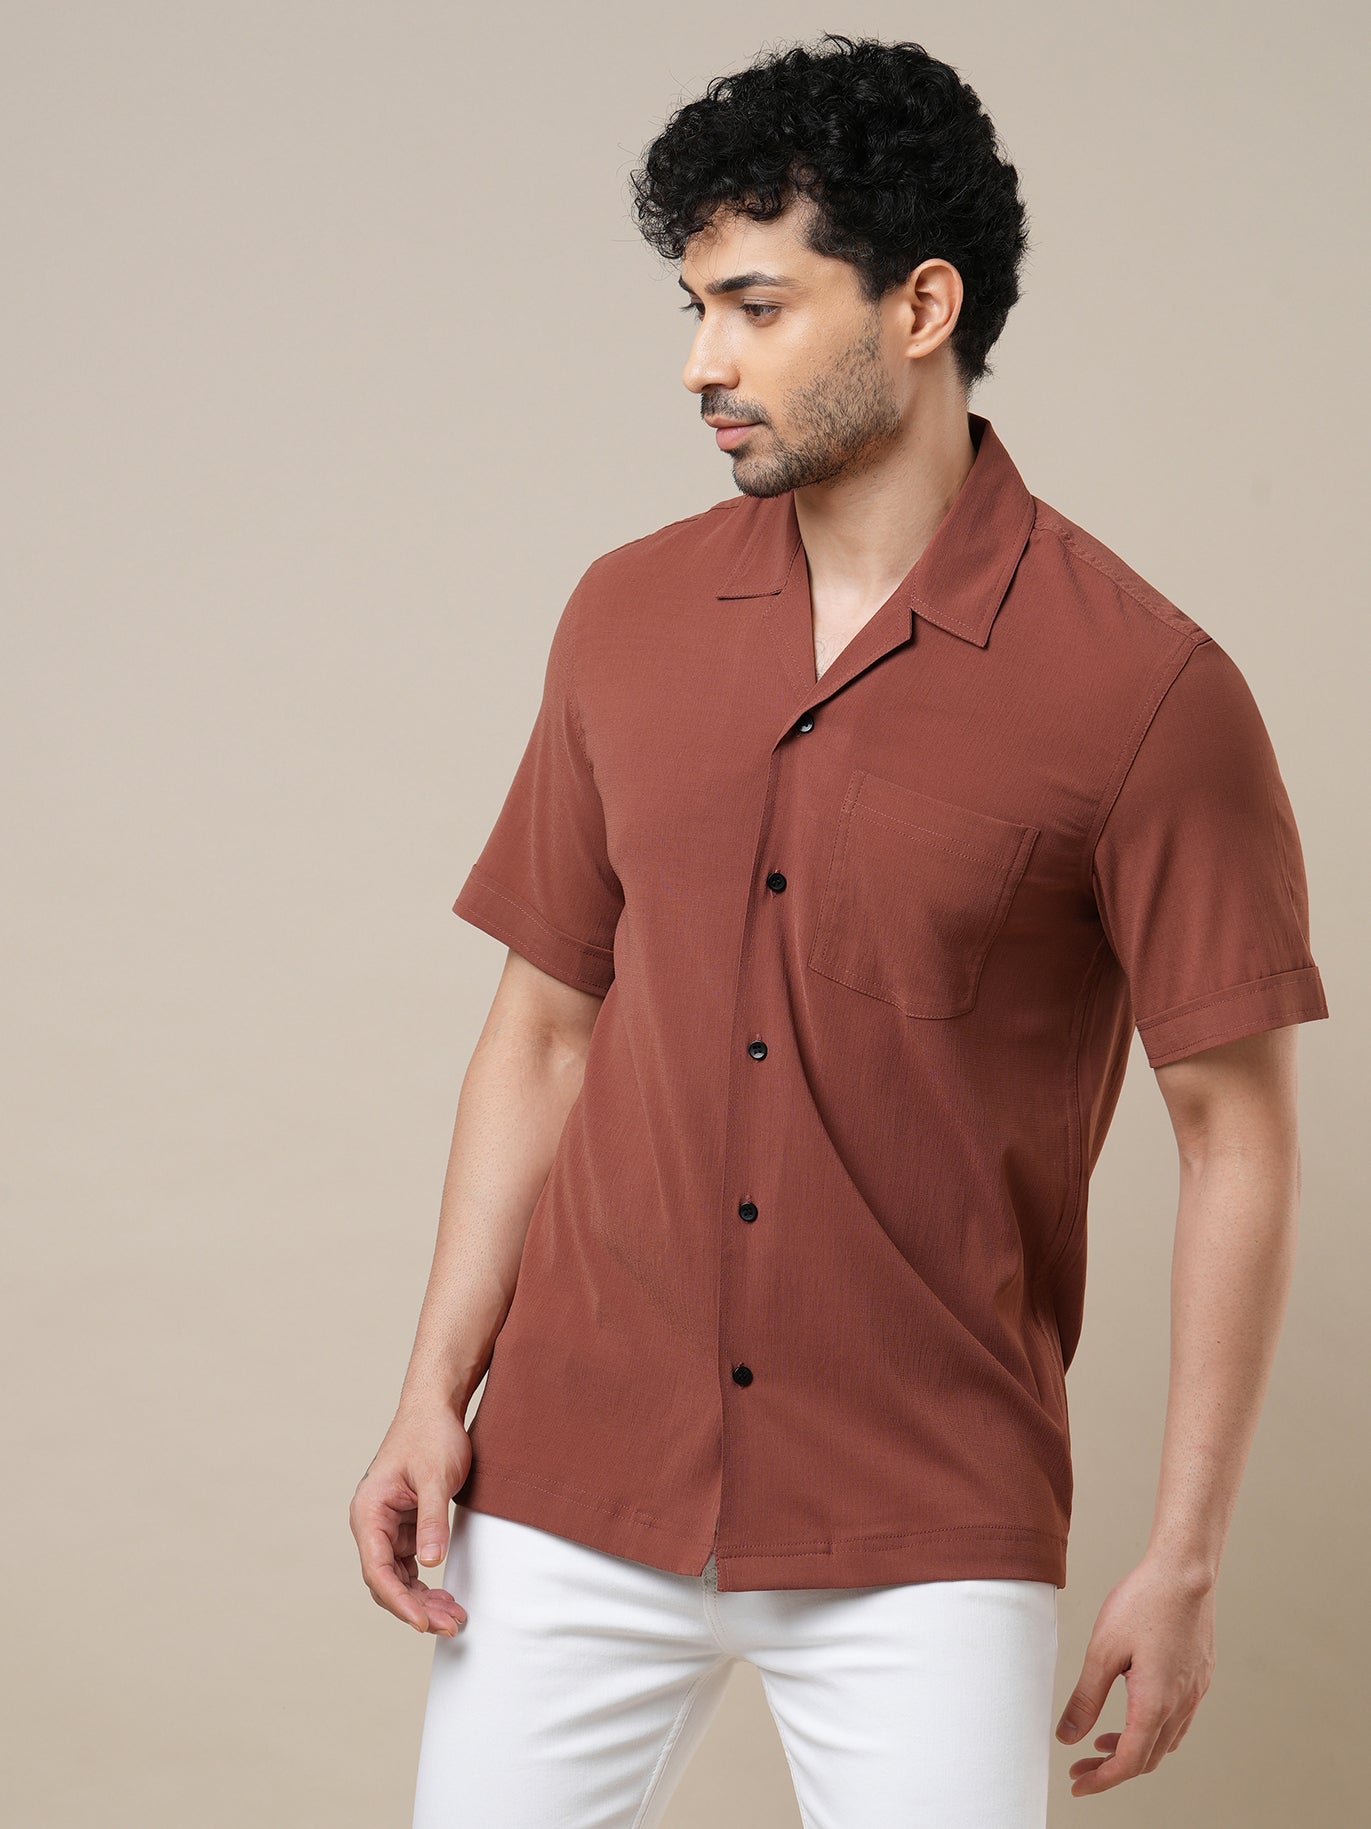 Cuban Collared - Shirts & Tops